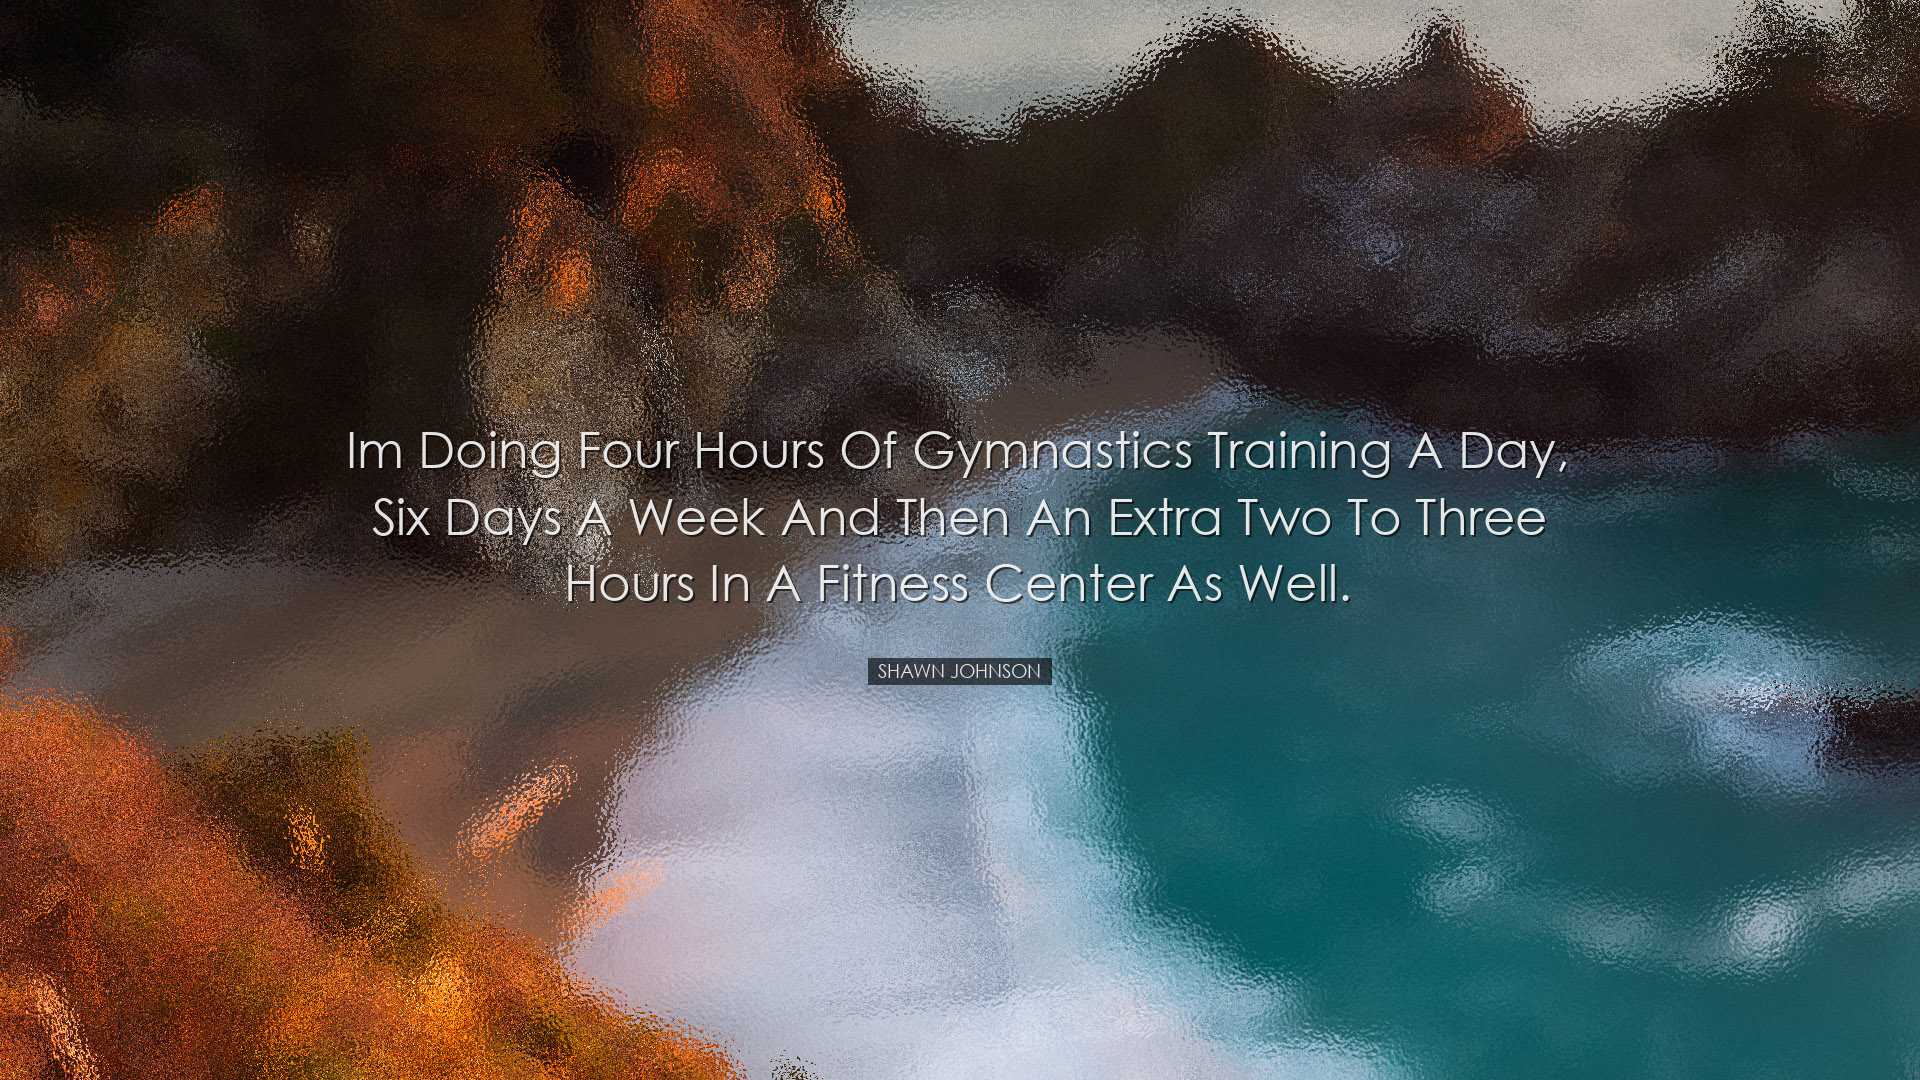 Im doing four hours of gymnastics training a day, six days a week